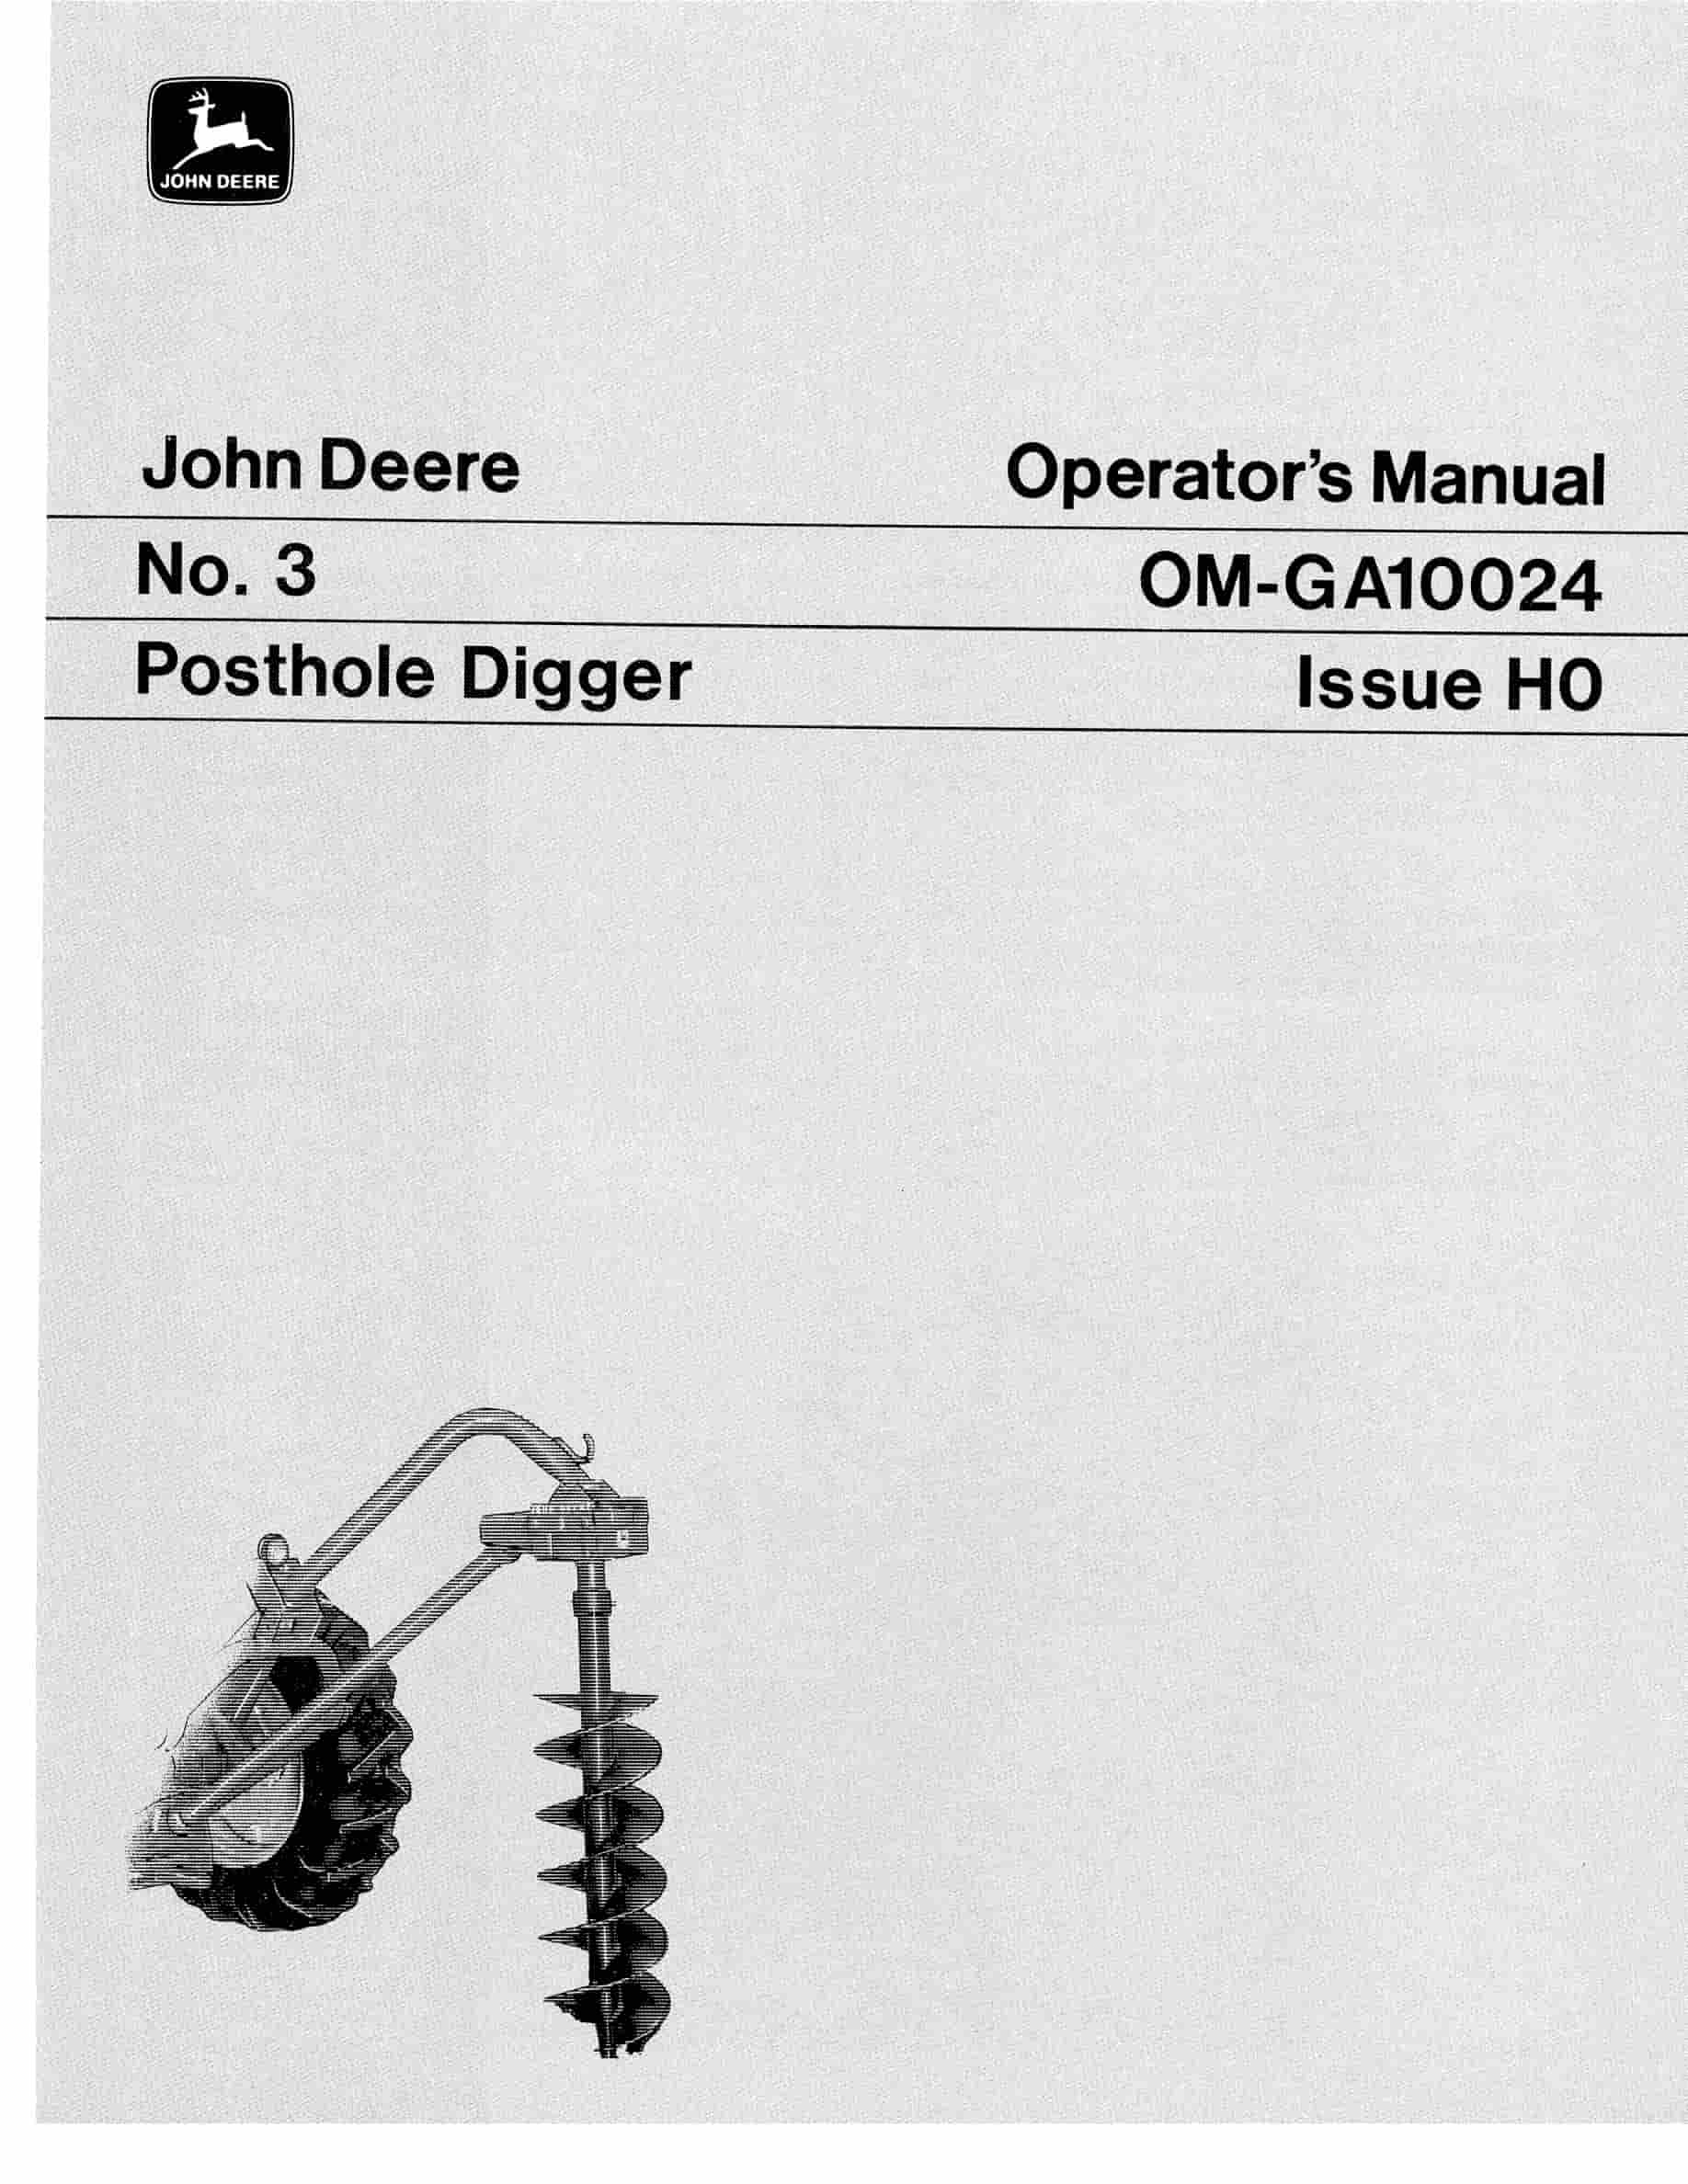 John Deere NO.3 POSTHOLE DIGGER Operator Manual OMGA10024-1